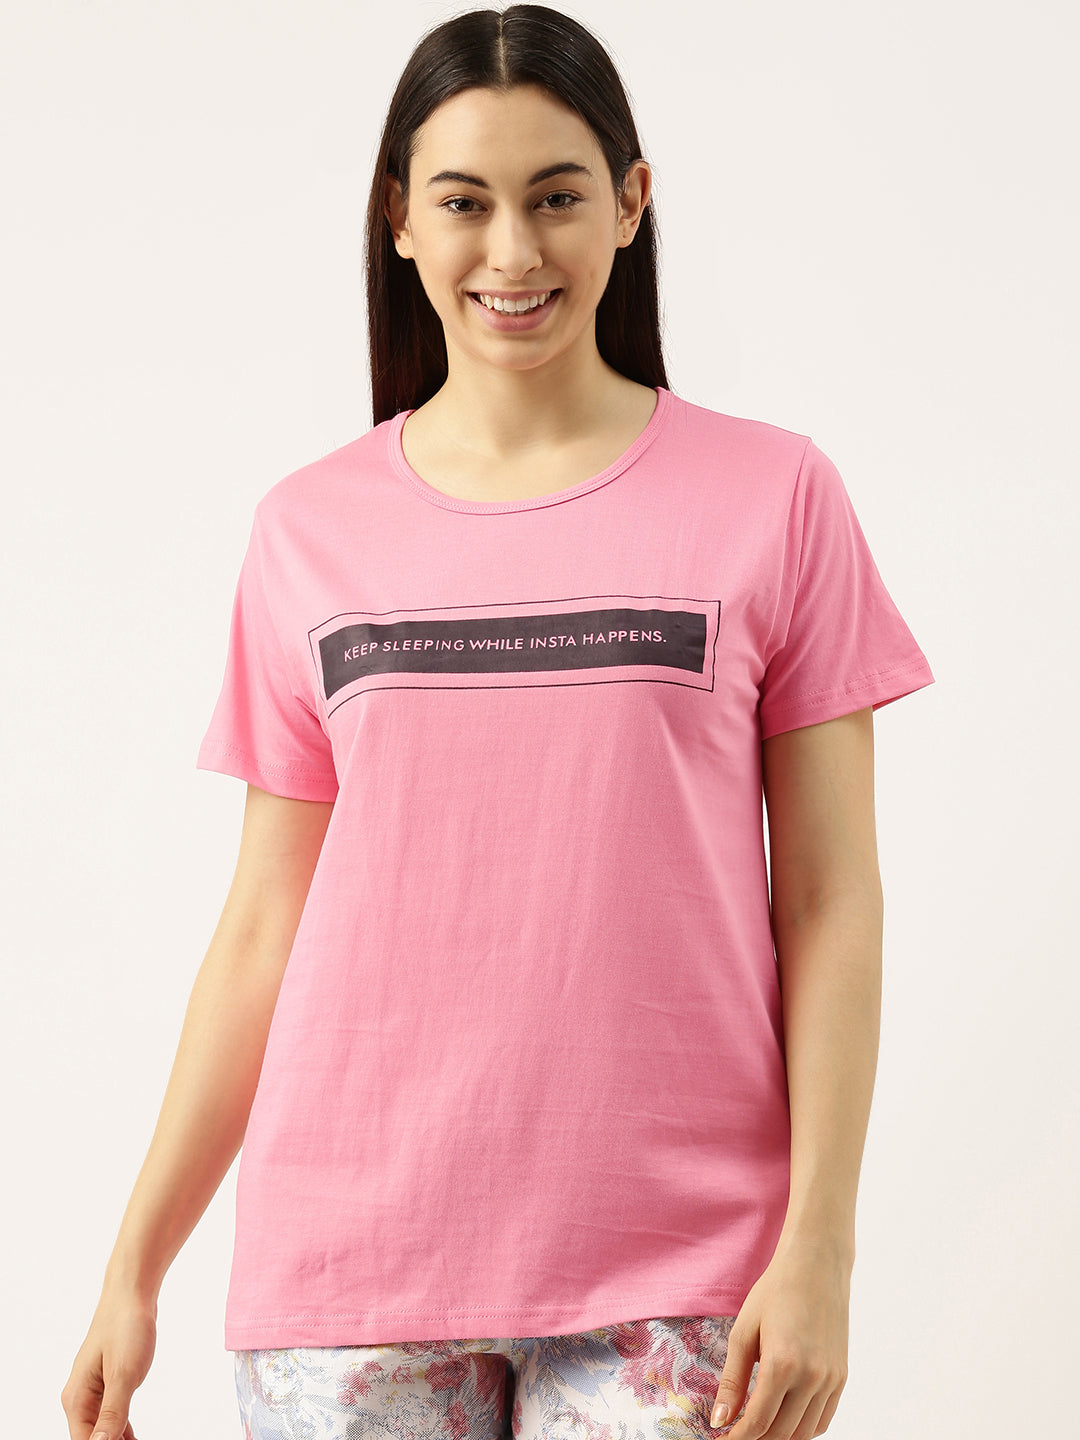 T923 Women Printed Cotton T-shirt - Clt.s